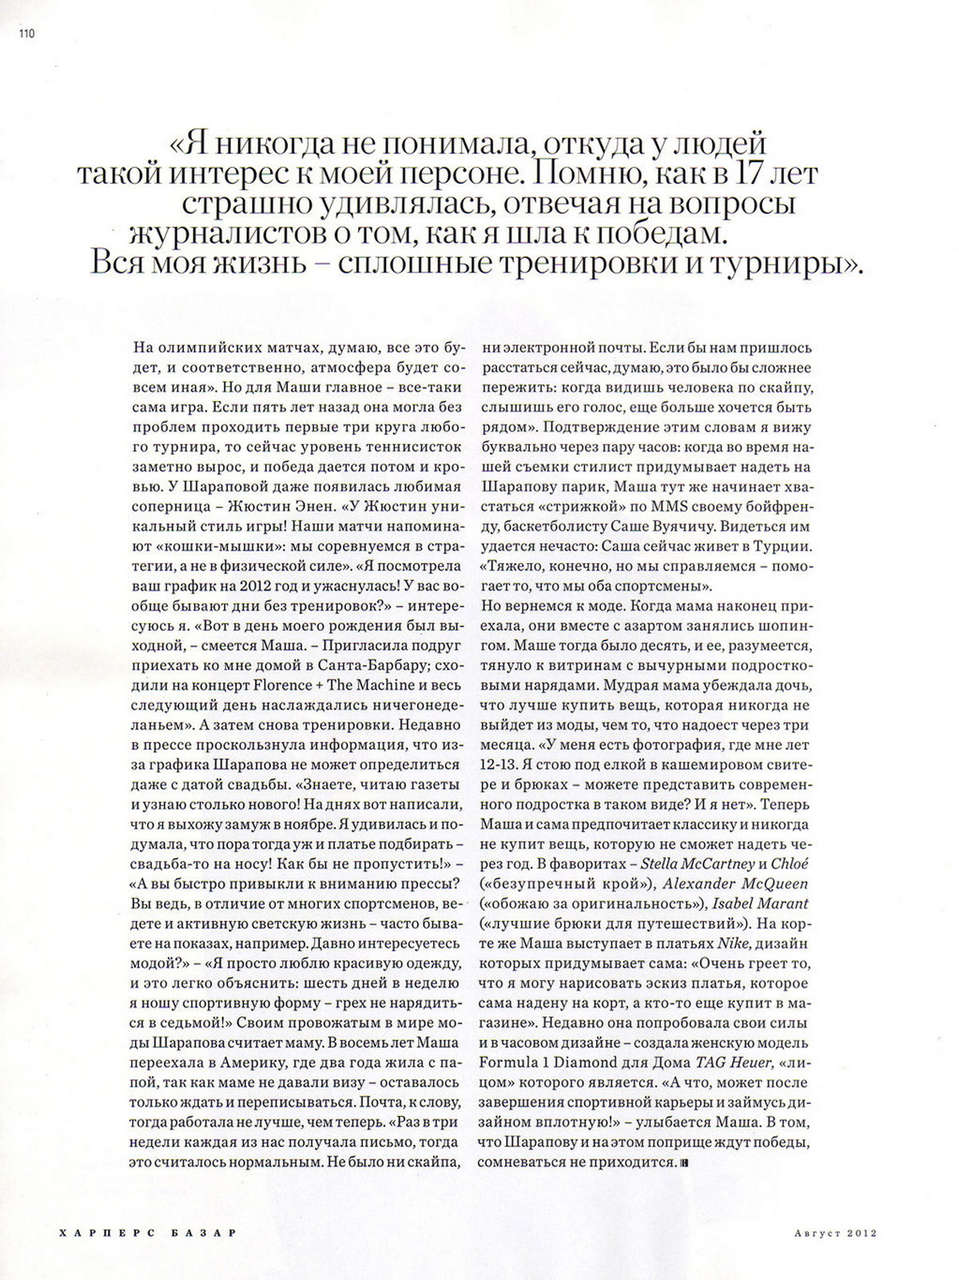 Maria Sharapova Harpers Bazaar Magazine Russia August 2012 Issue